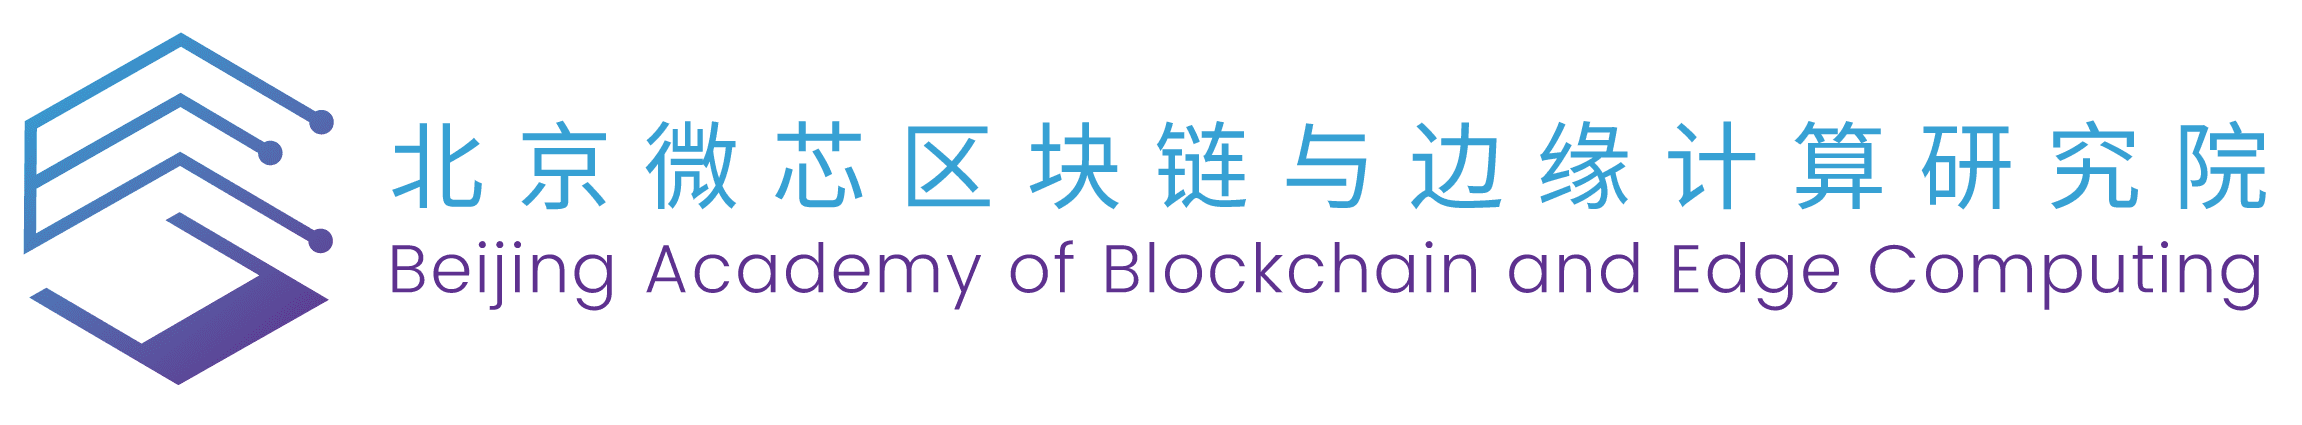 Beijing Academy of Blockchain and Edge Computing Logo